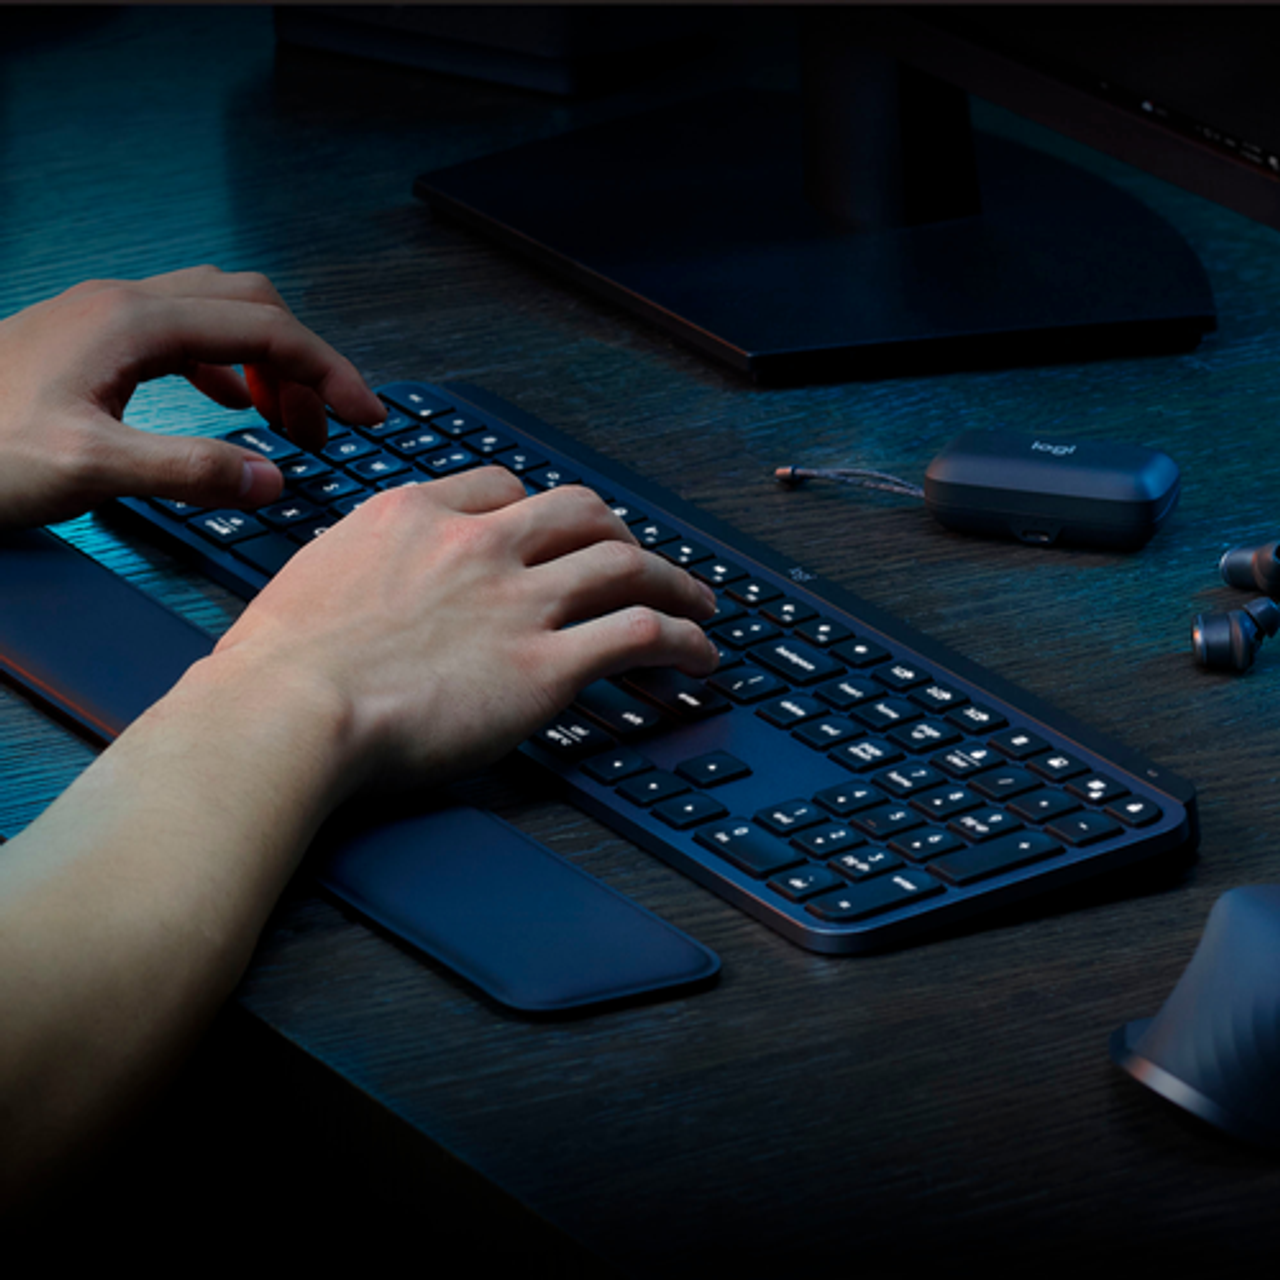 Logitech - MX Keys S Advanced Full-size Wireless Scissor Keyboard for PC and Mac with Backlit keys - Black